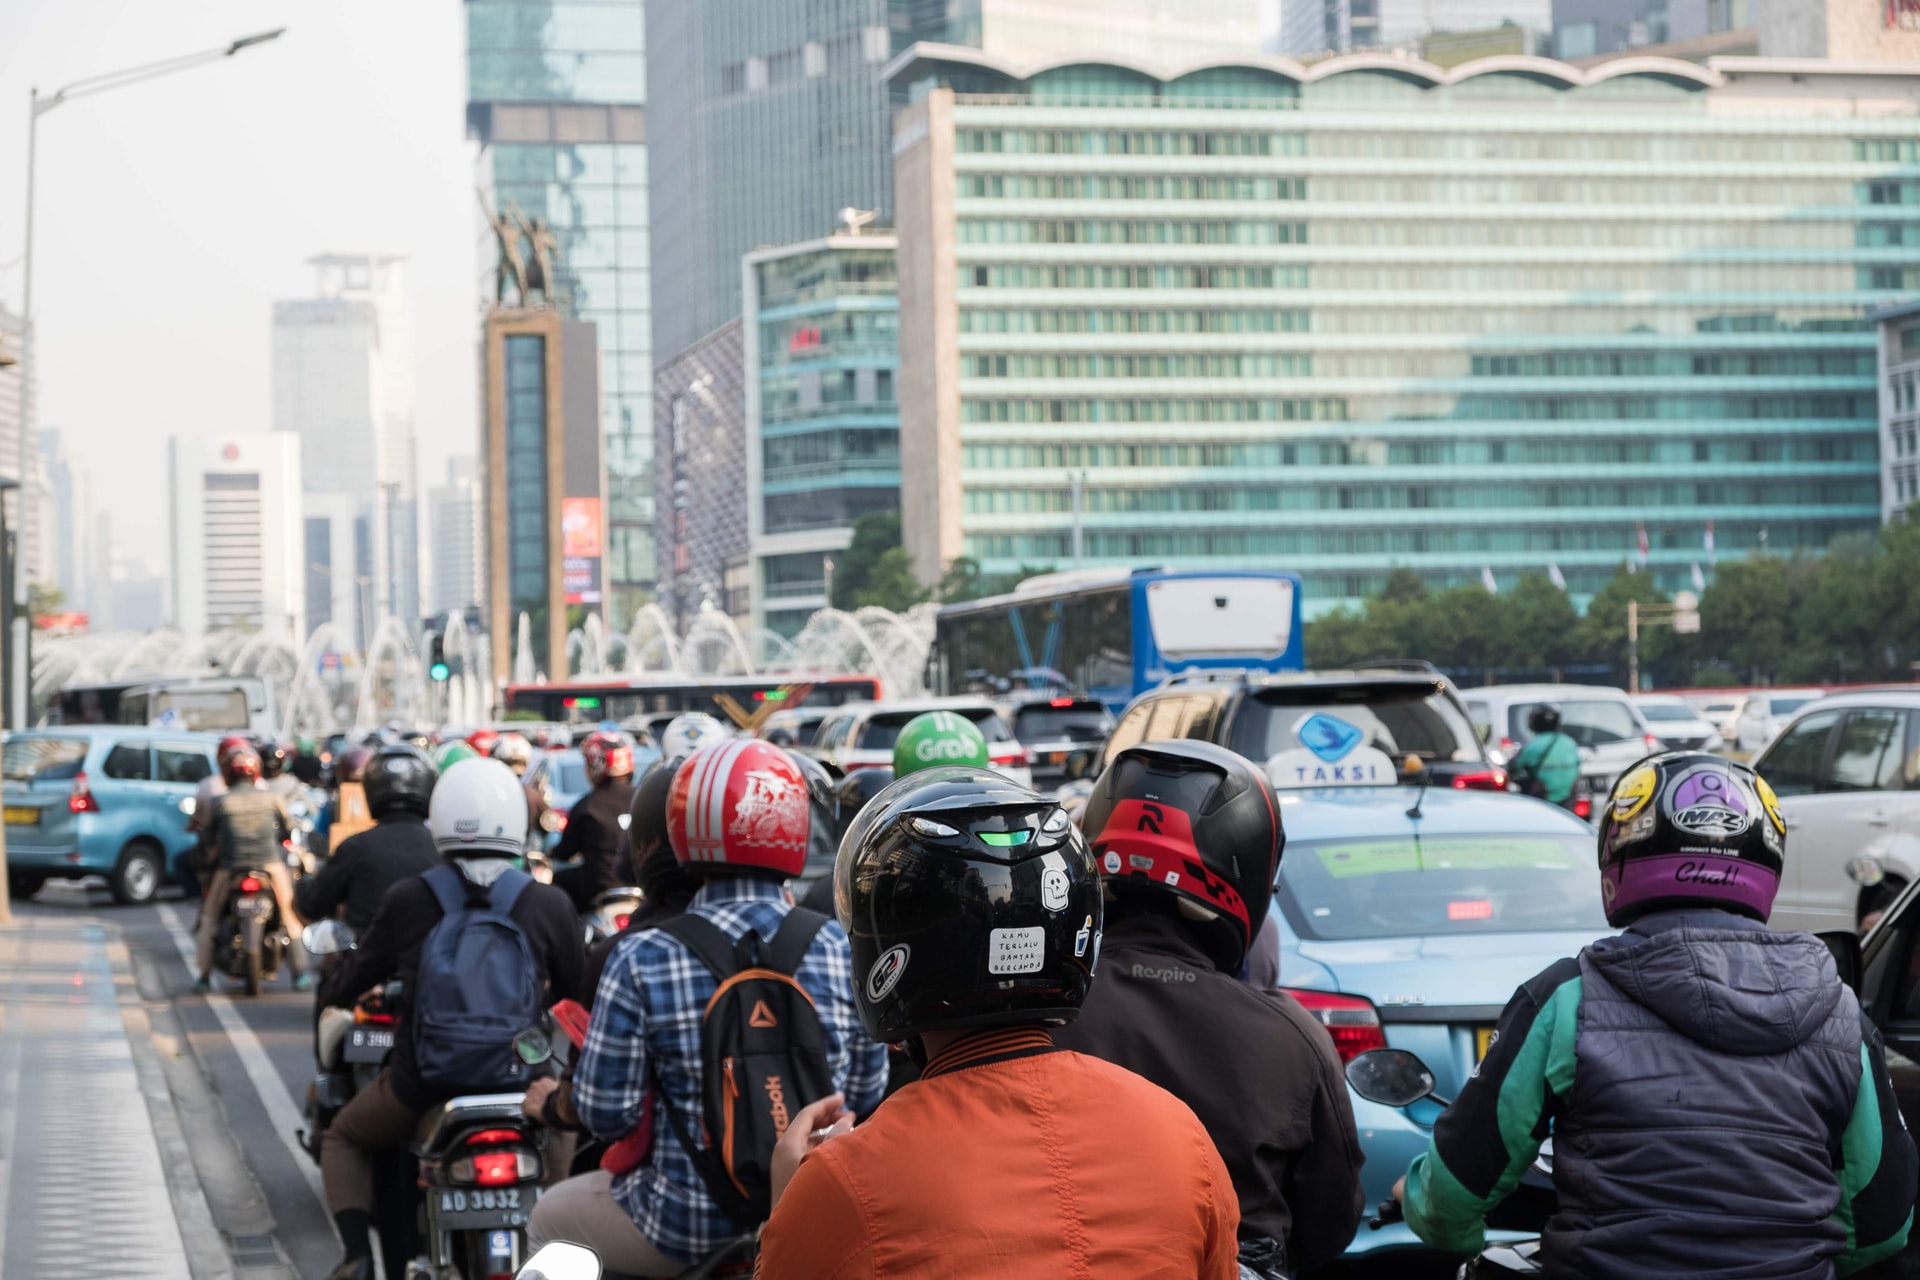 Kepolisian Dirlantas Polda Metro Jaya akan mengusulkan satu aturan jam kerja yang harus diberlakukan di Jakarta untuk mengurai kemacetan.-Adrian Pranata-Unsplash